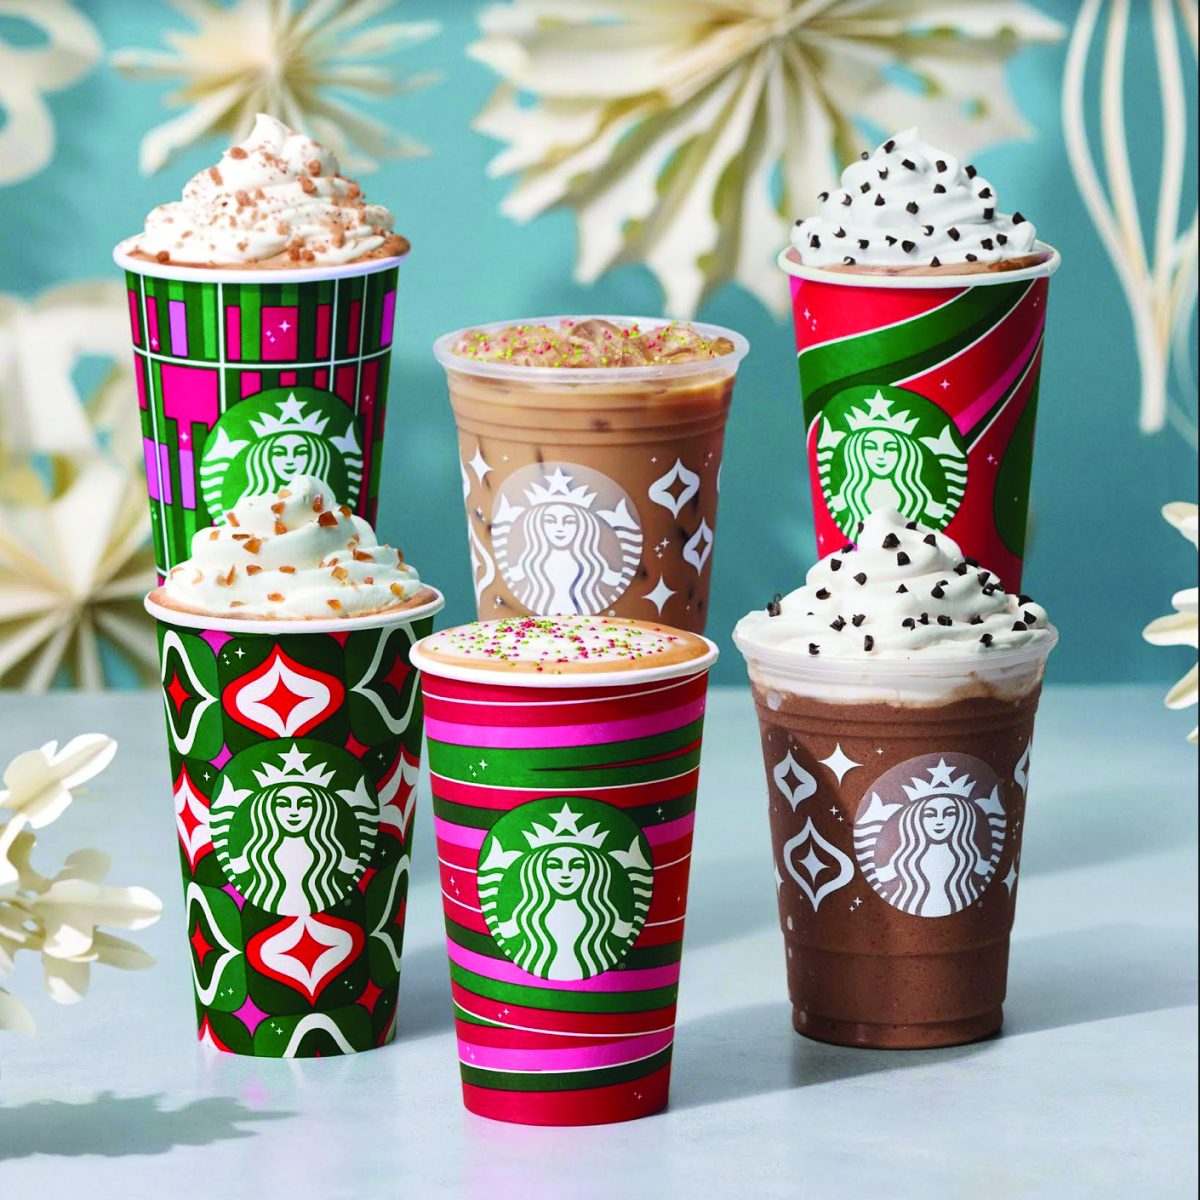 Starbucks new holiday drinks